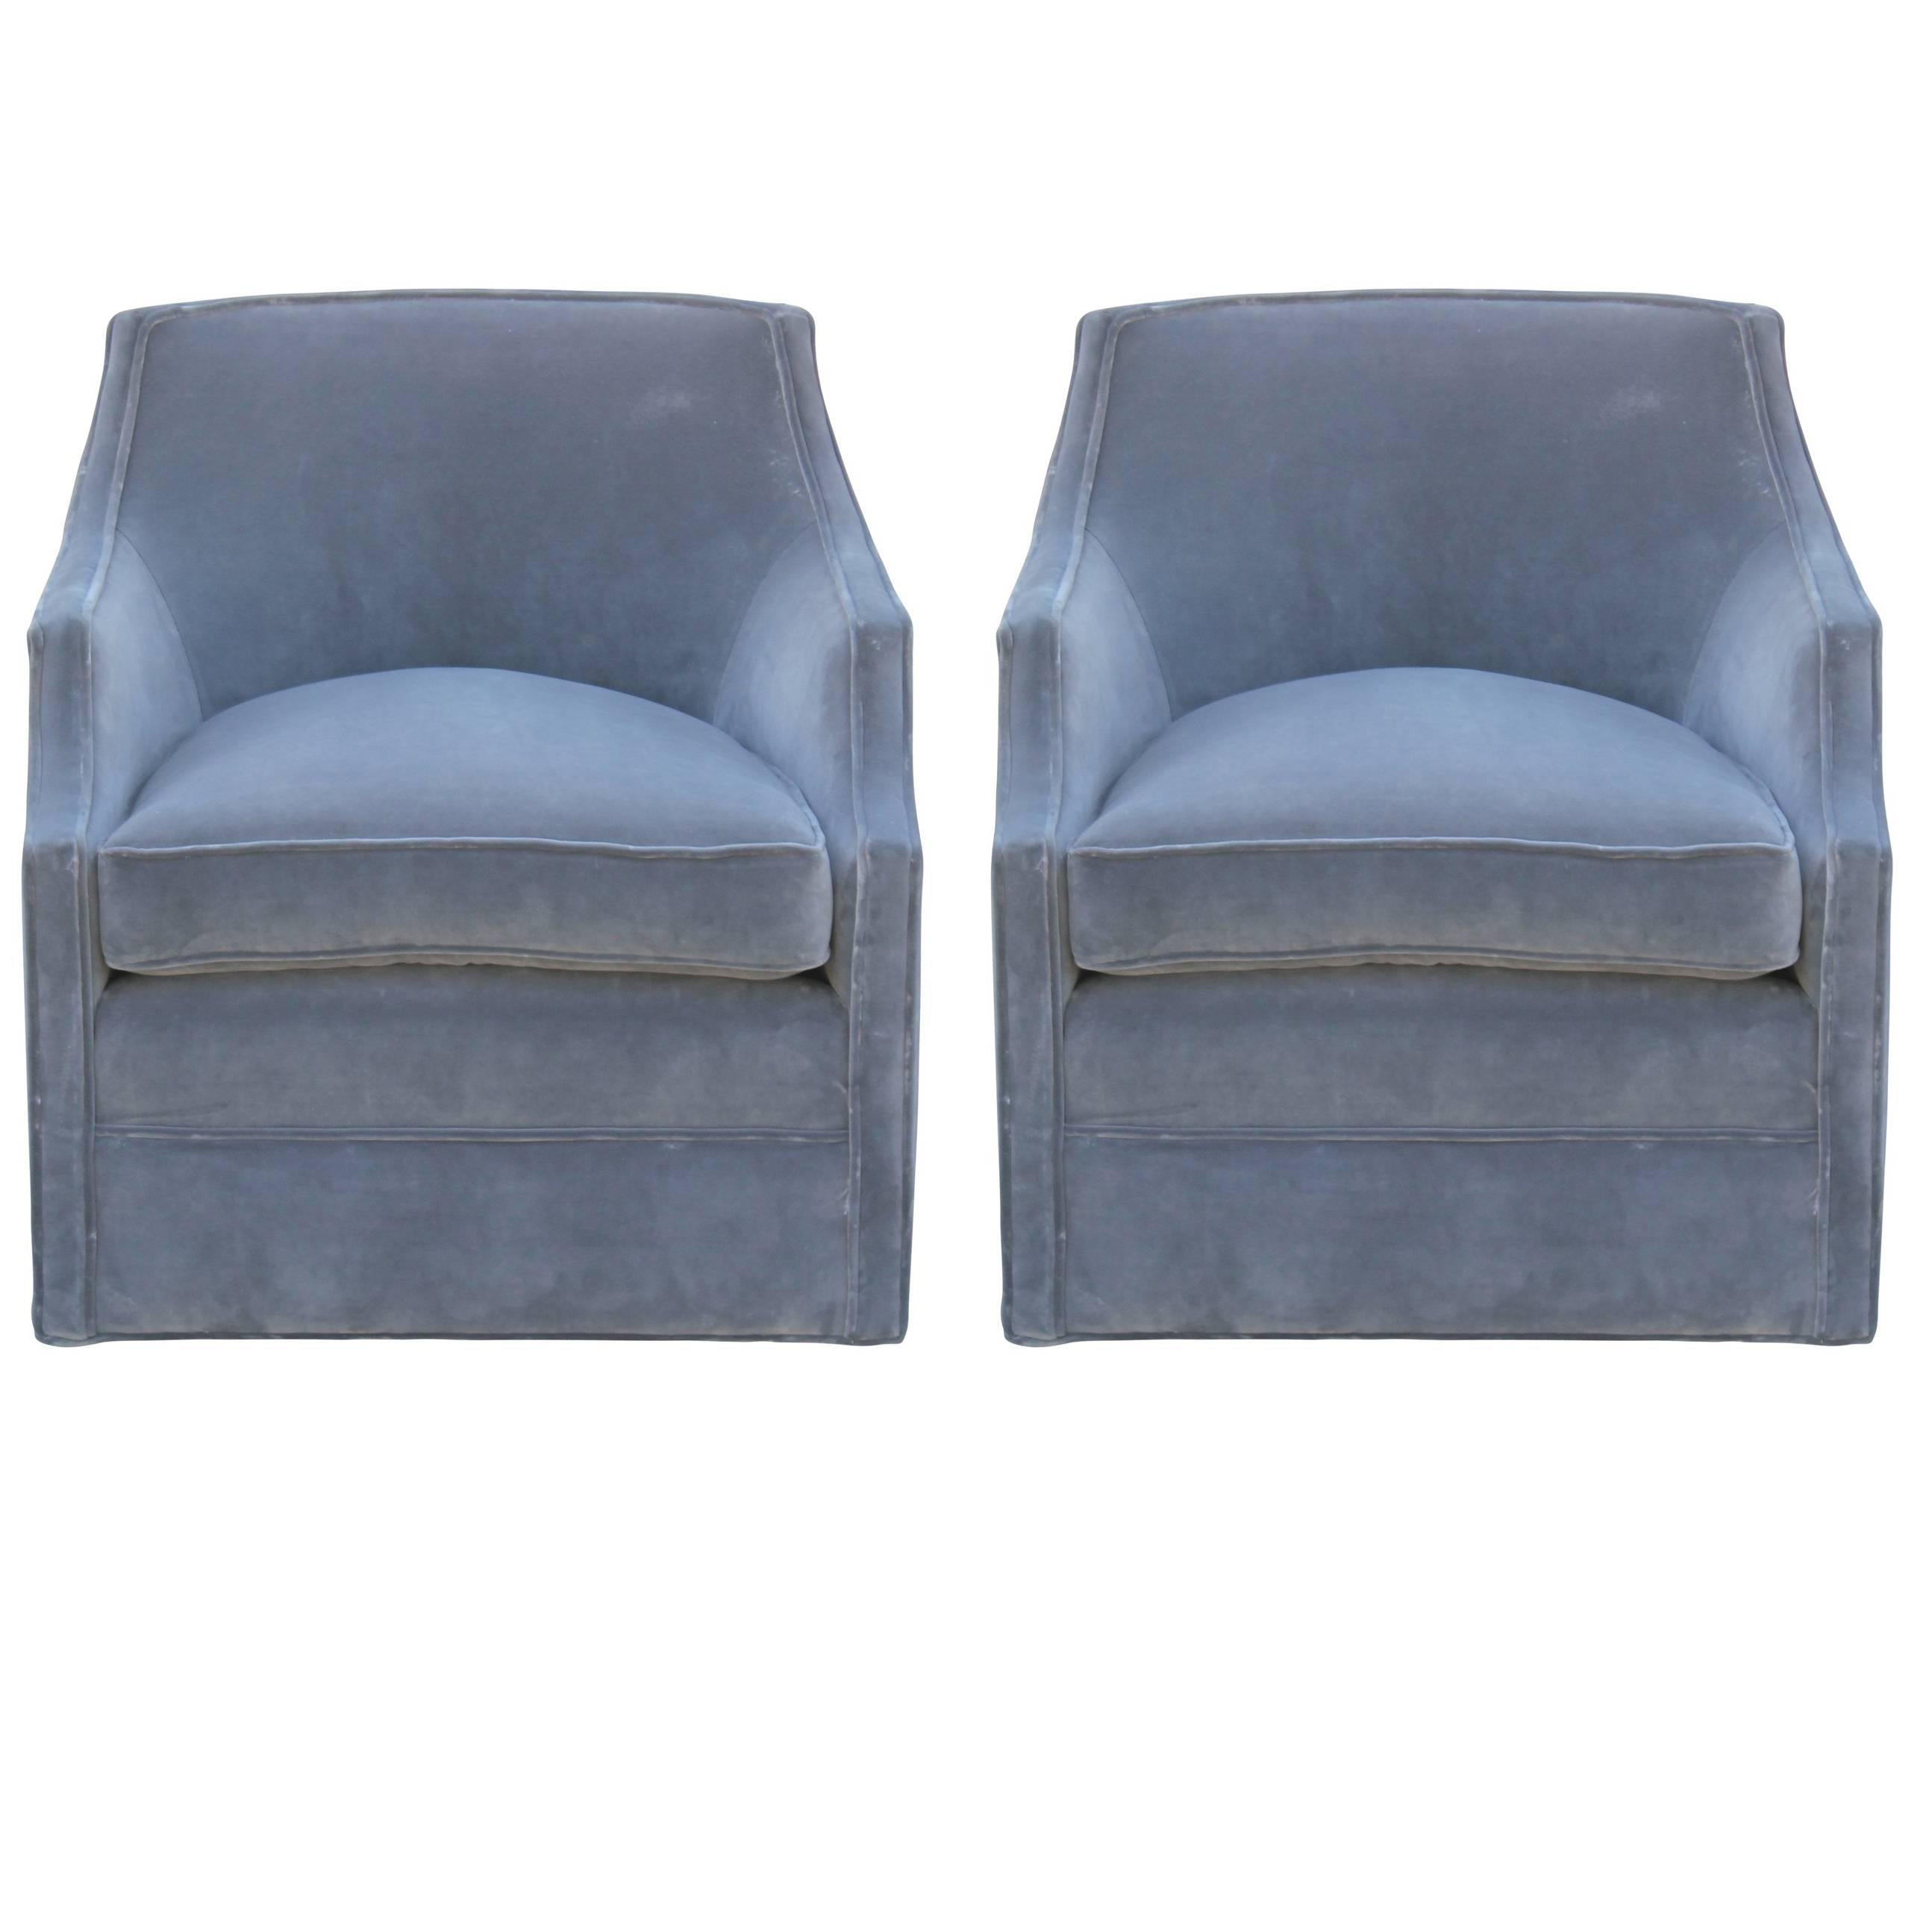 Pair of Modern Swivel Chairs in Grey Velvet in the Style of Baker Furniture